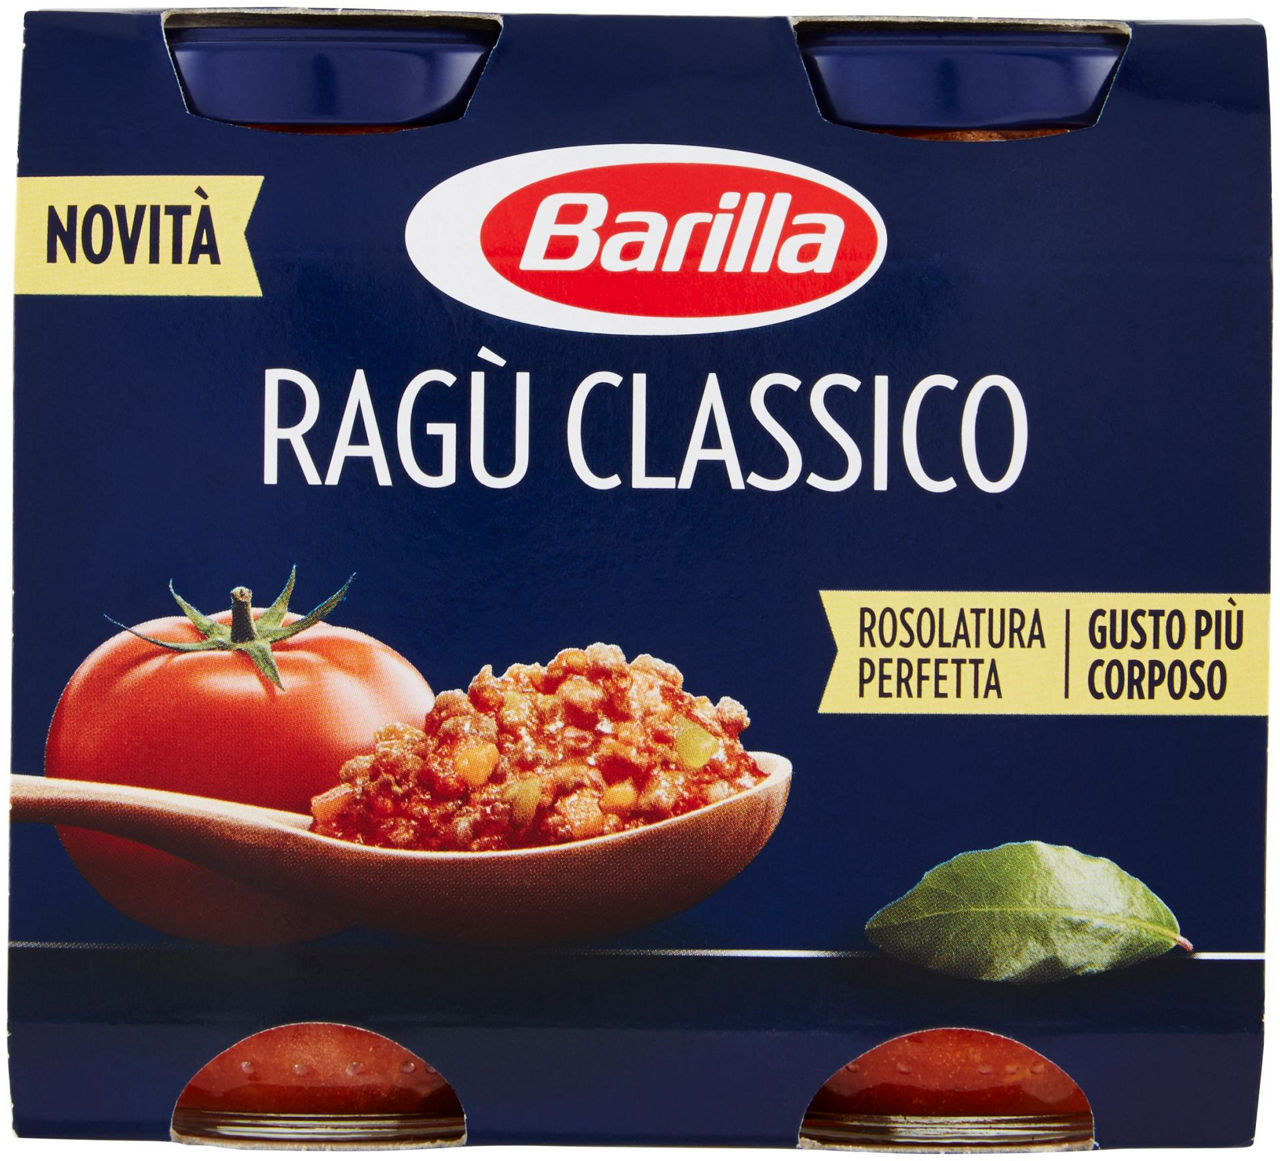 RAGU' CLASSICO BARILLA CLUSTER VASO VETRO G 180 X 2 - 0